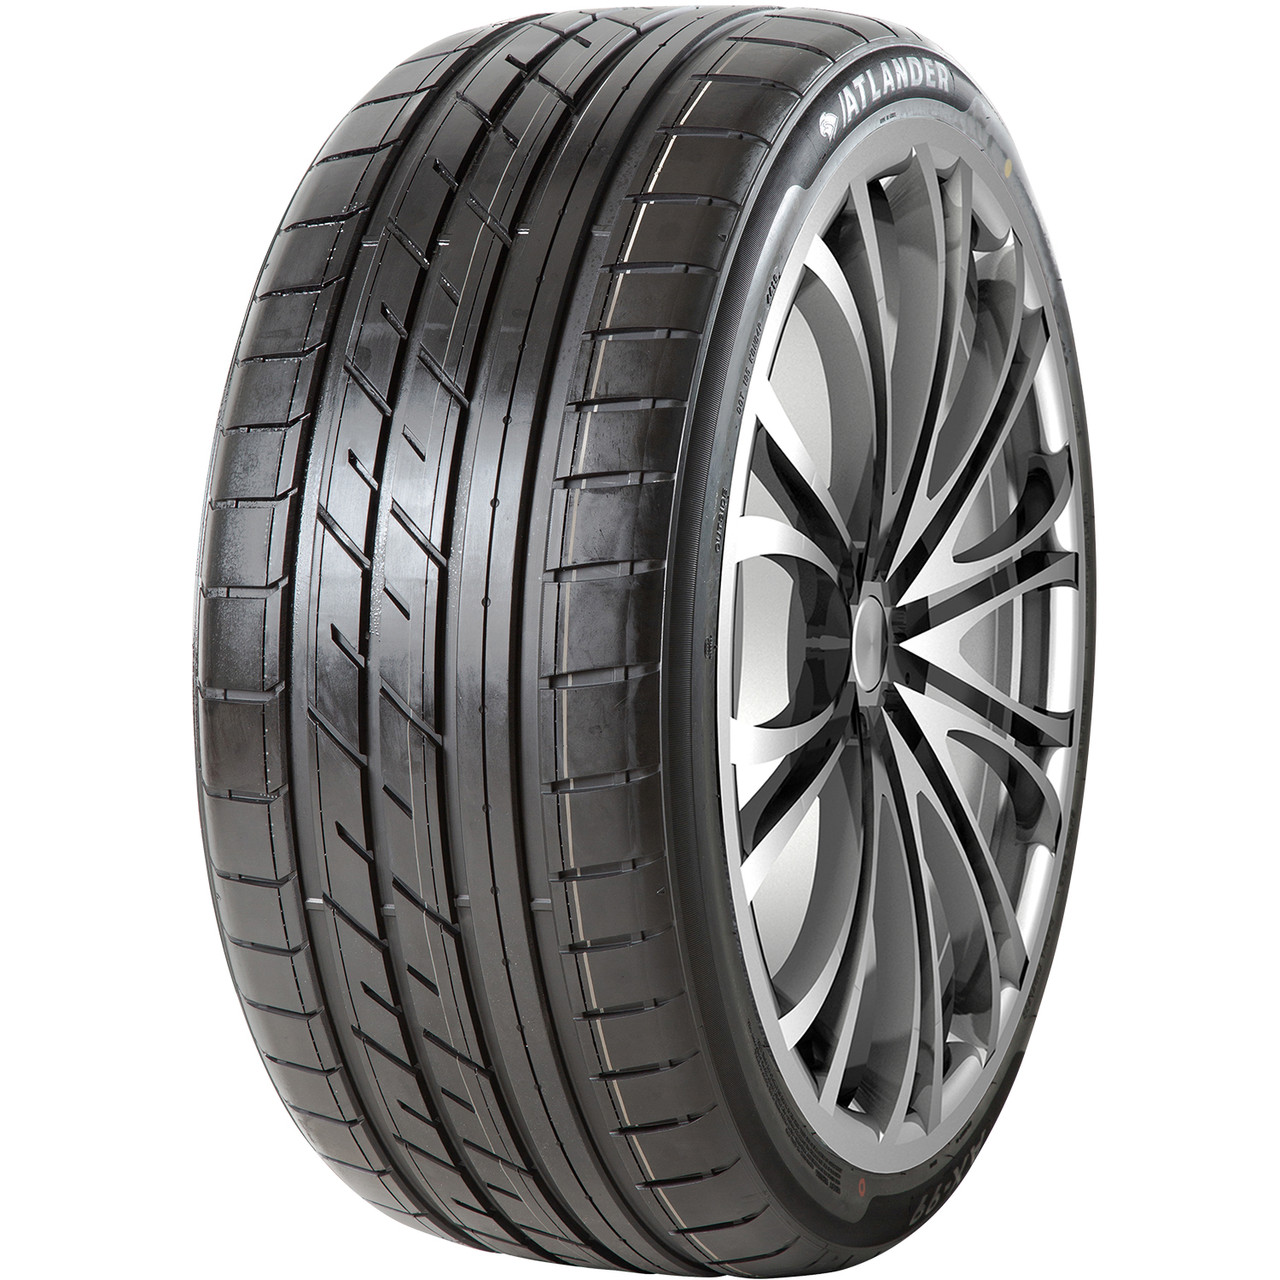 Photos - Tyre Atlander AX-99 275/30R24, All Season, High Performance tires. 